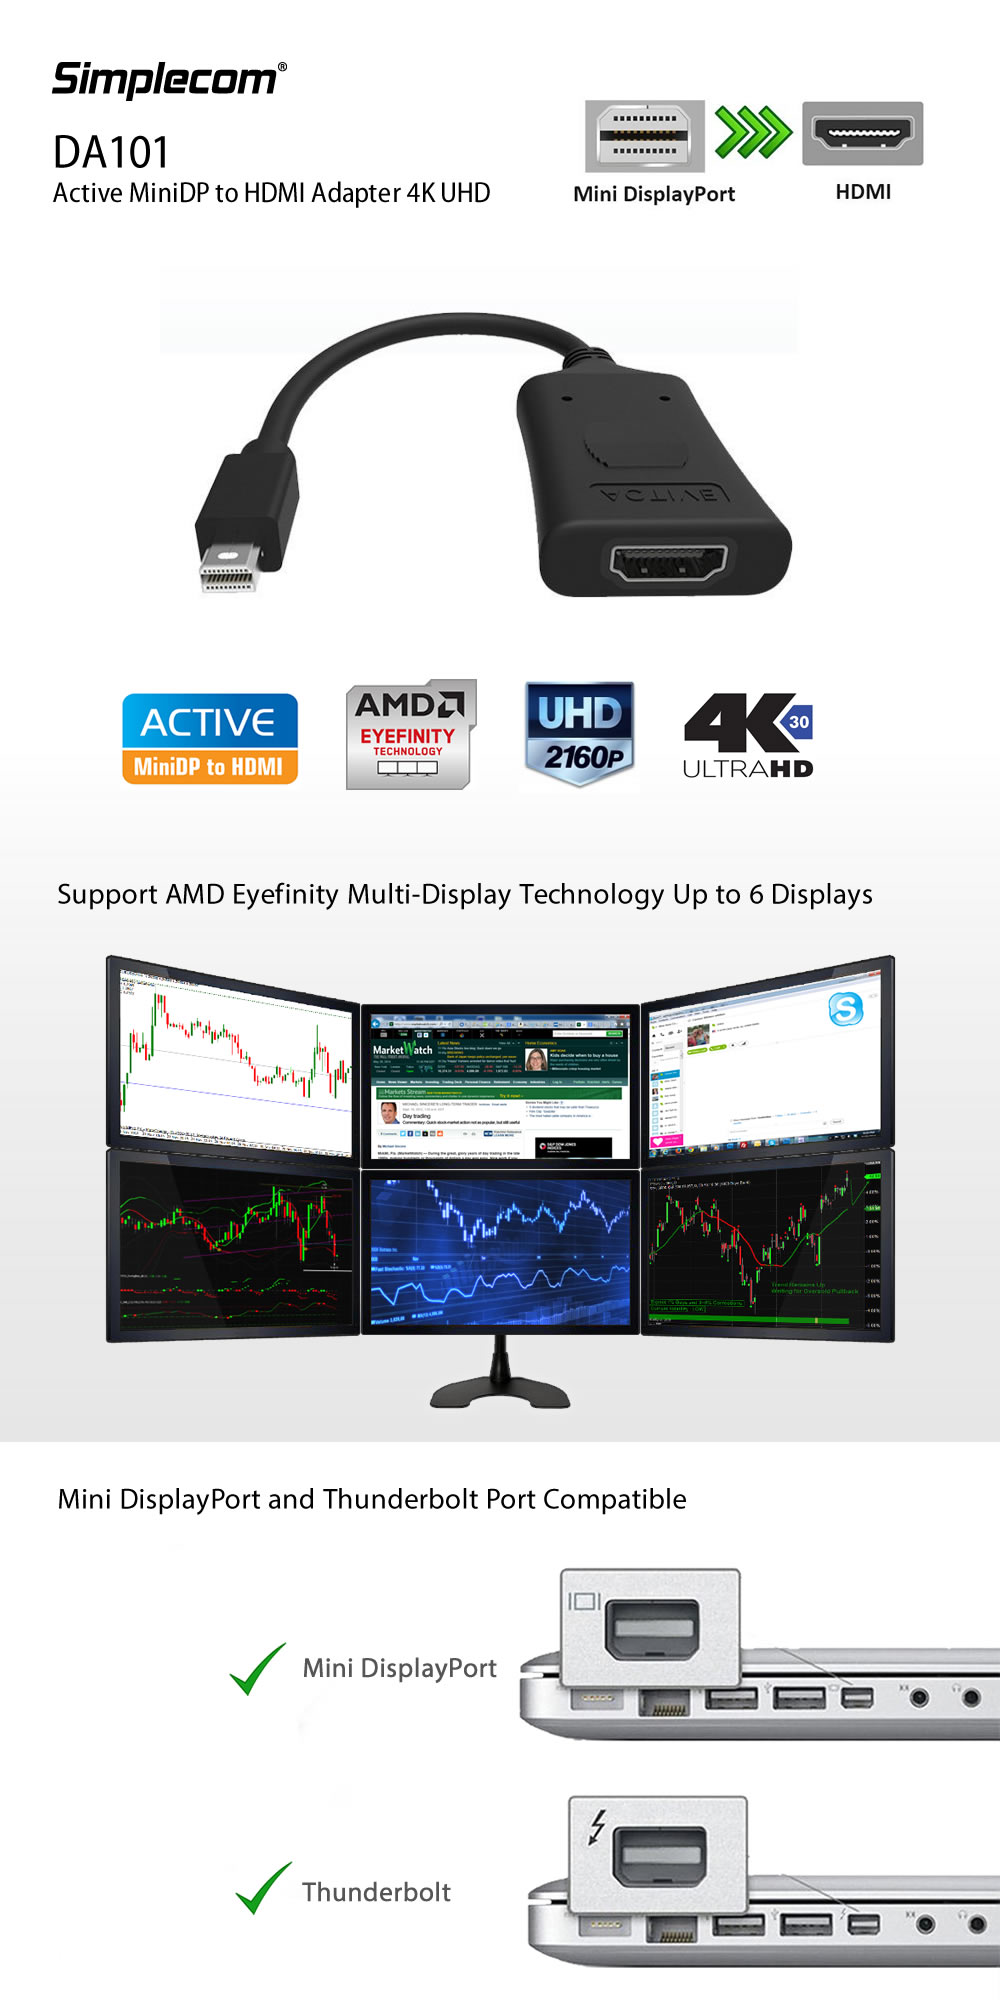 Simplecom DA101 Active MiniDP to HDMI Adapter 4K UHD (Thunderbolt and Eyefinity Compatible) 1